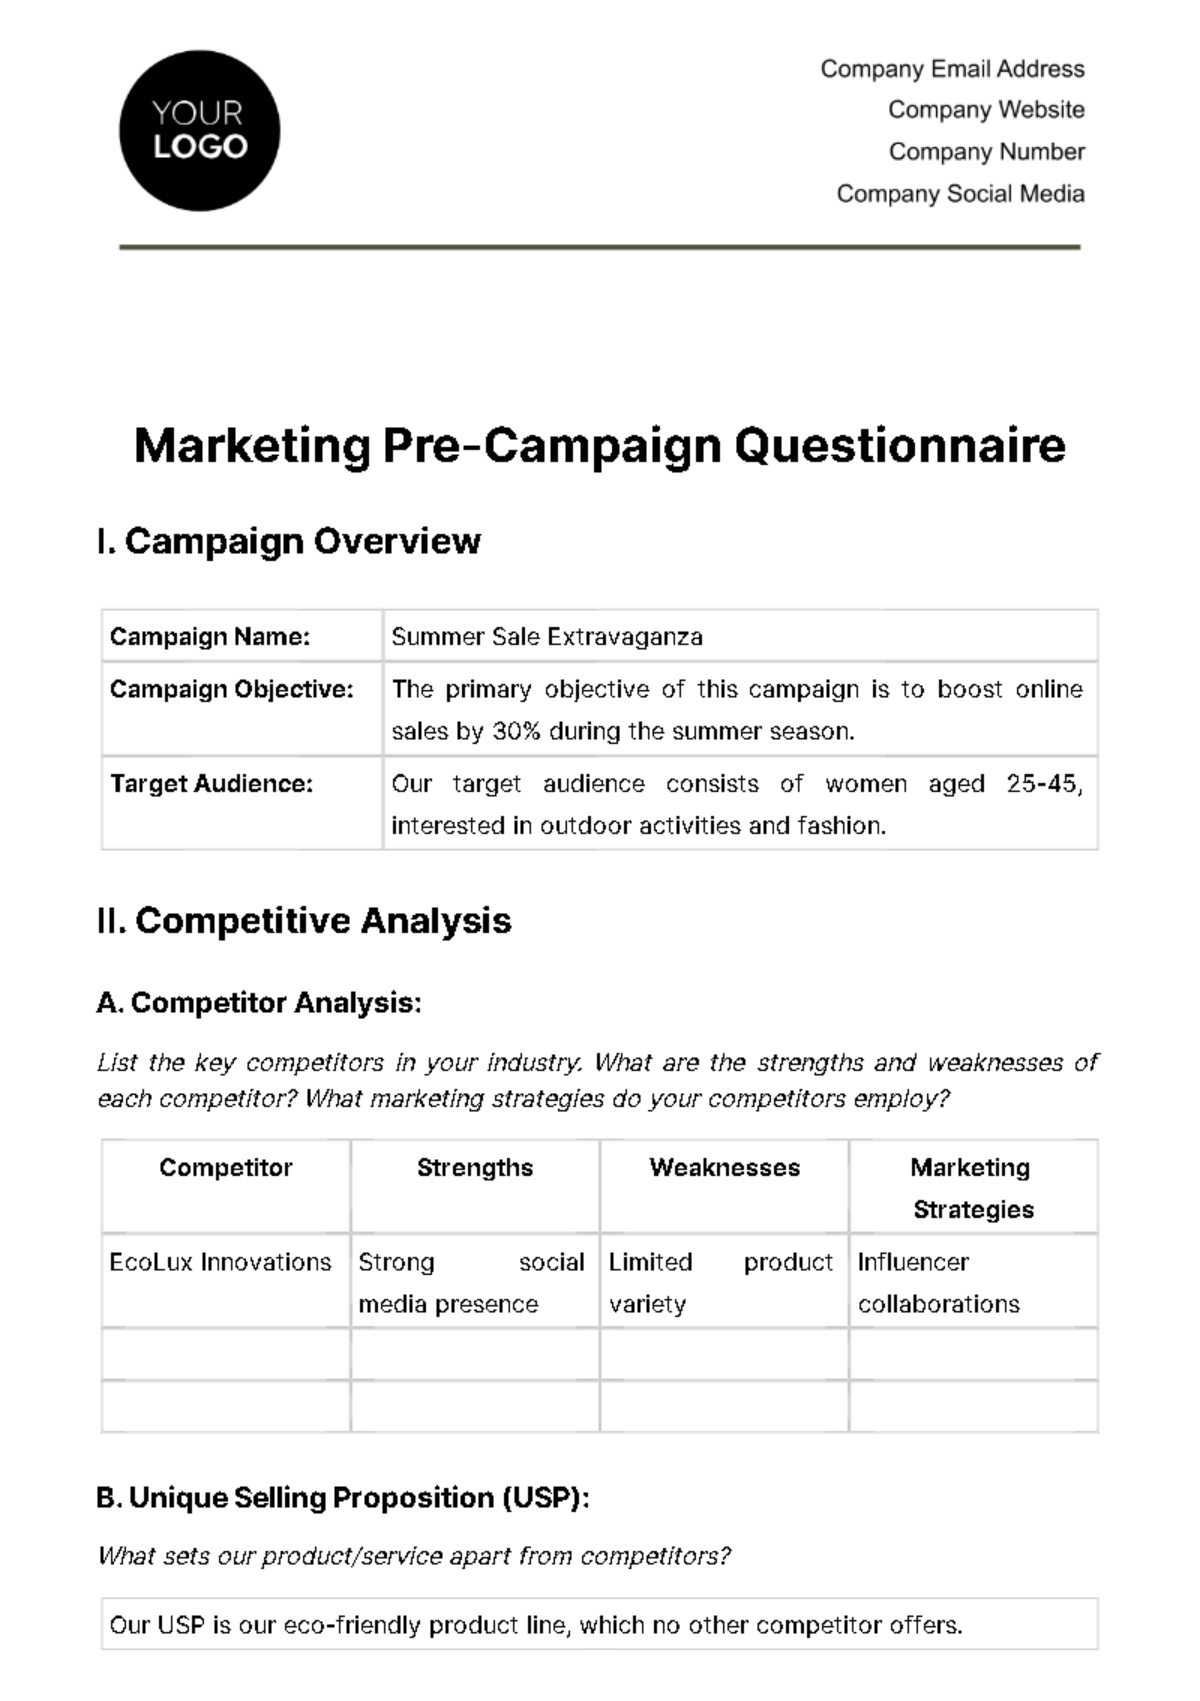 Free Marketing Pre-Campaign Questionnaire Template